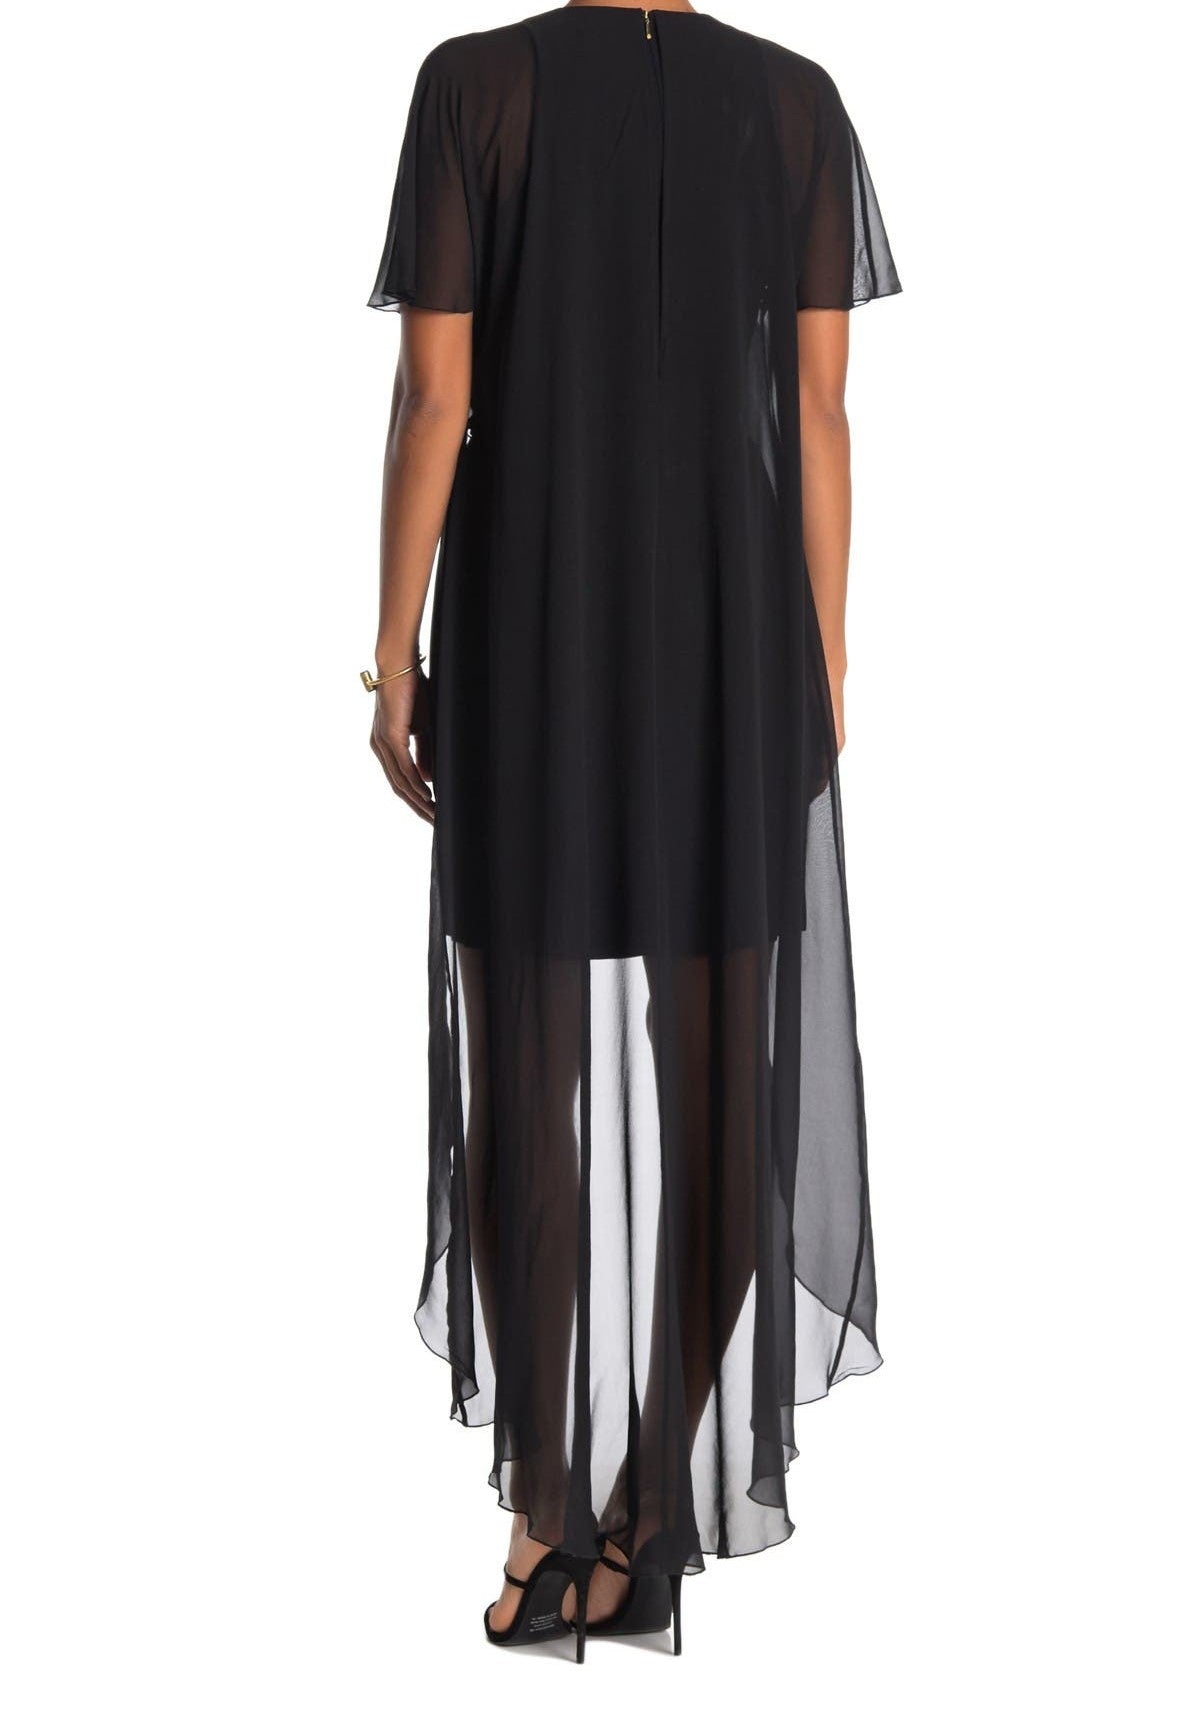 Trina Turk Capote Overlay Dress - Size 8